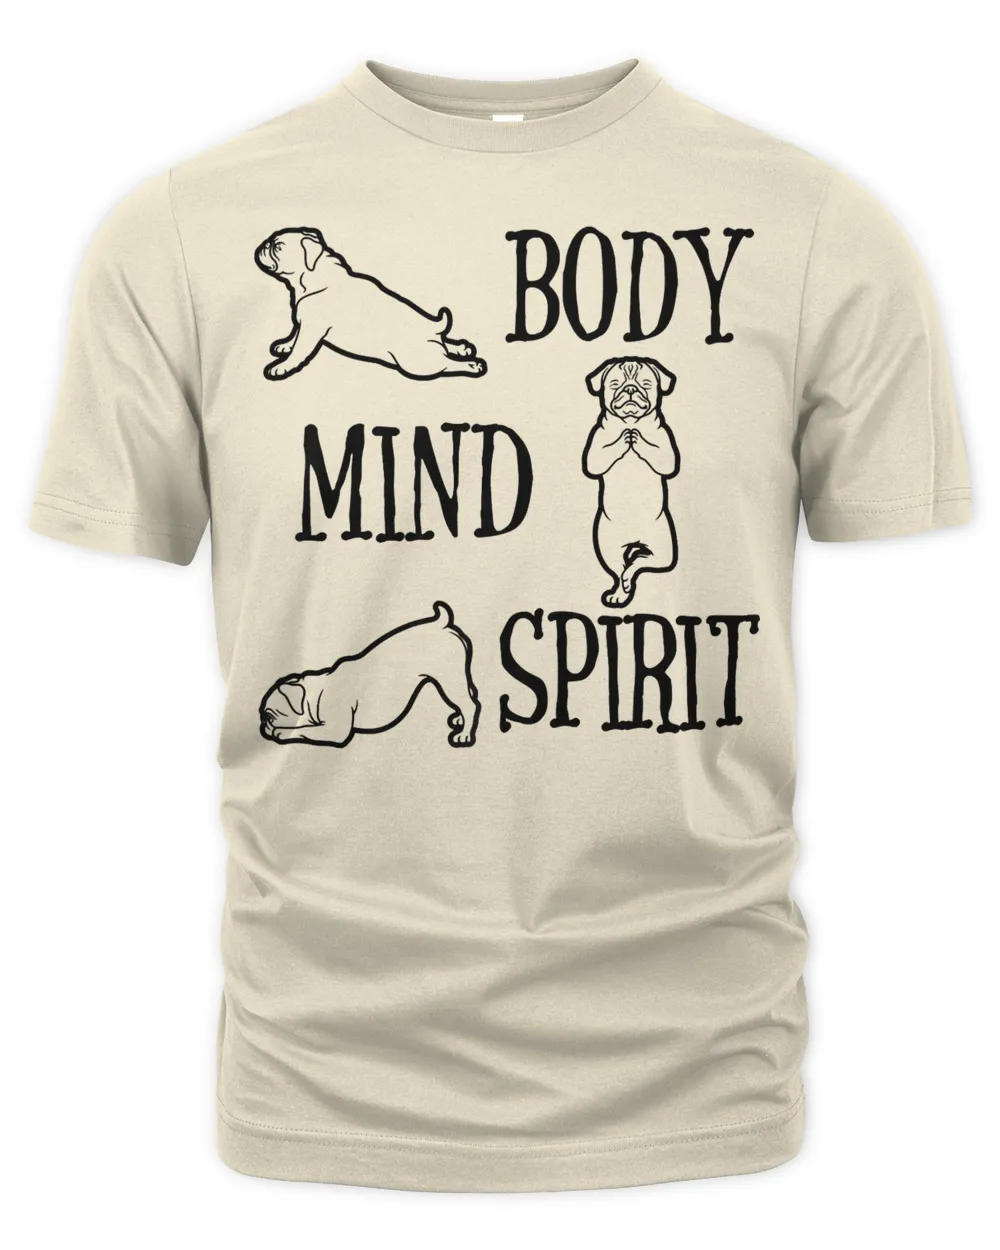 Yoga Pug, Ladies Man Dog Lover For Women Men Kids, Pug Yoga T-Shirt